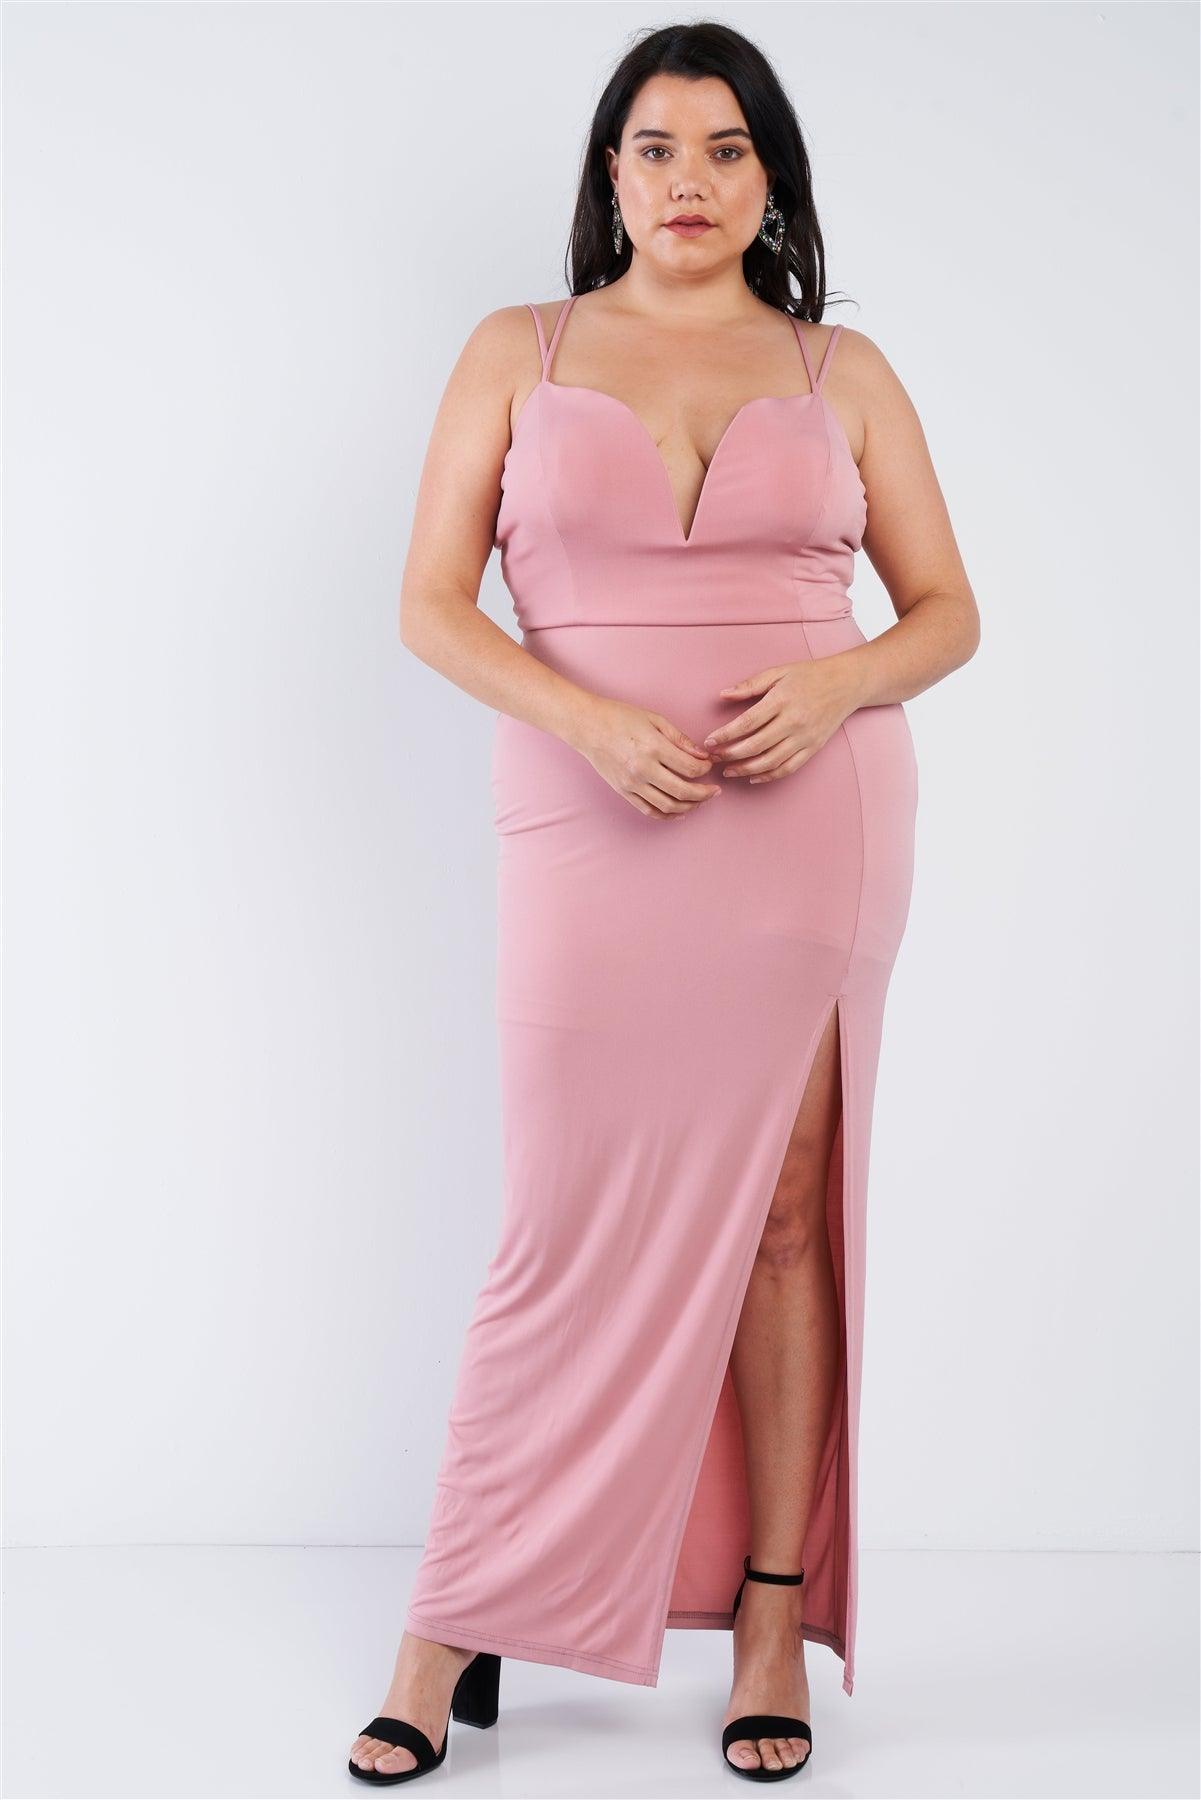 Junior Plus Size Sexy Mauve Pink Floor Length Dress /2-1-1